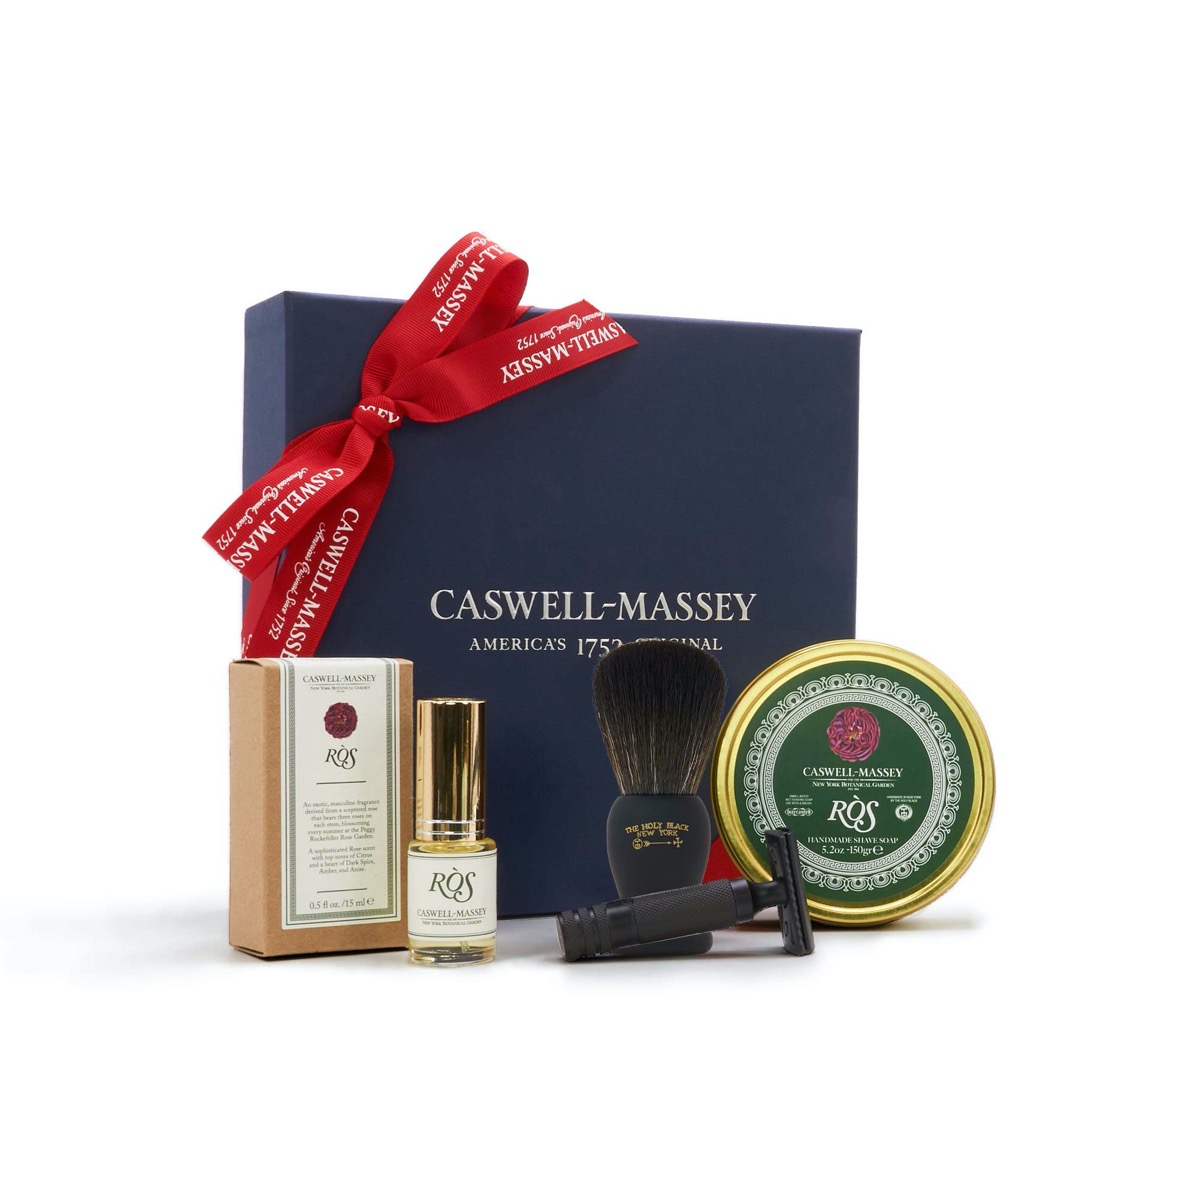 caswell-massey gift set